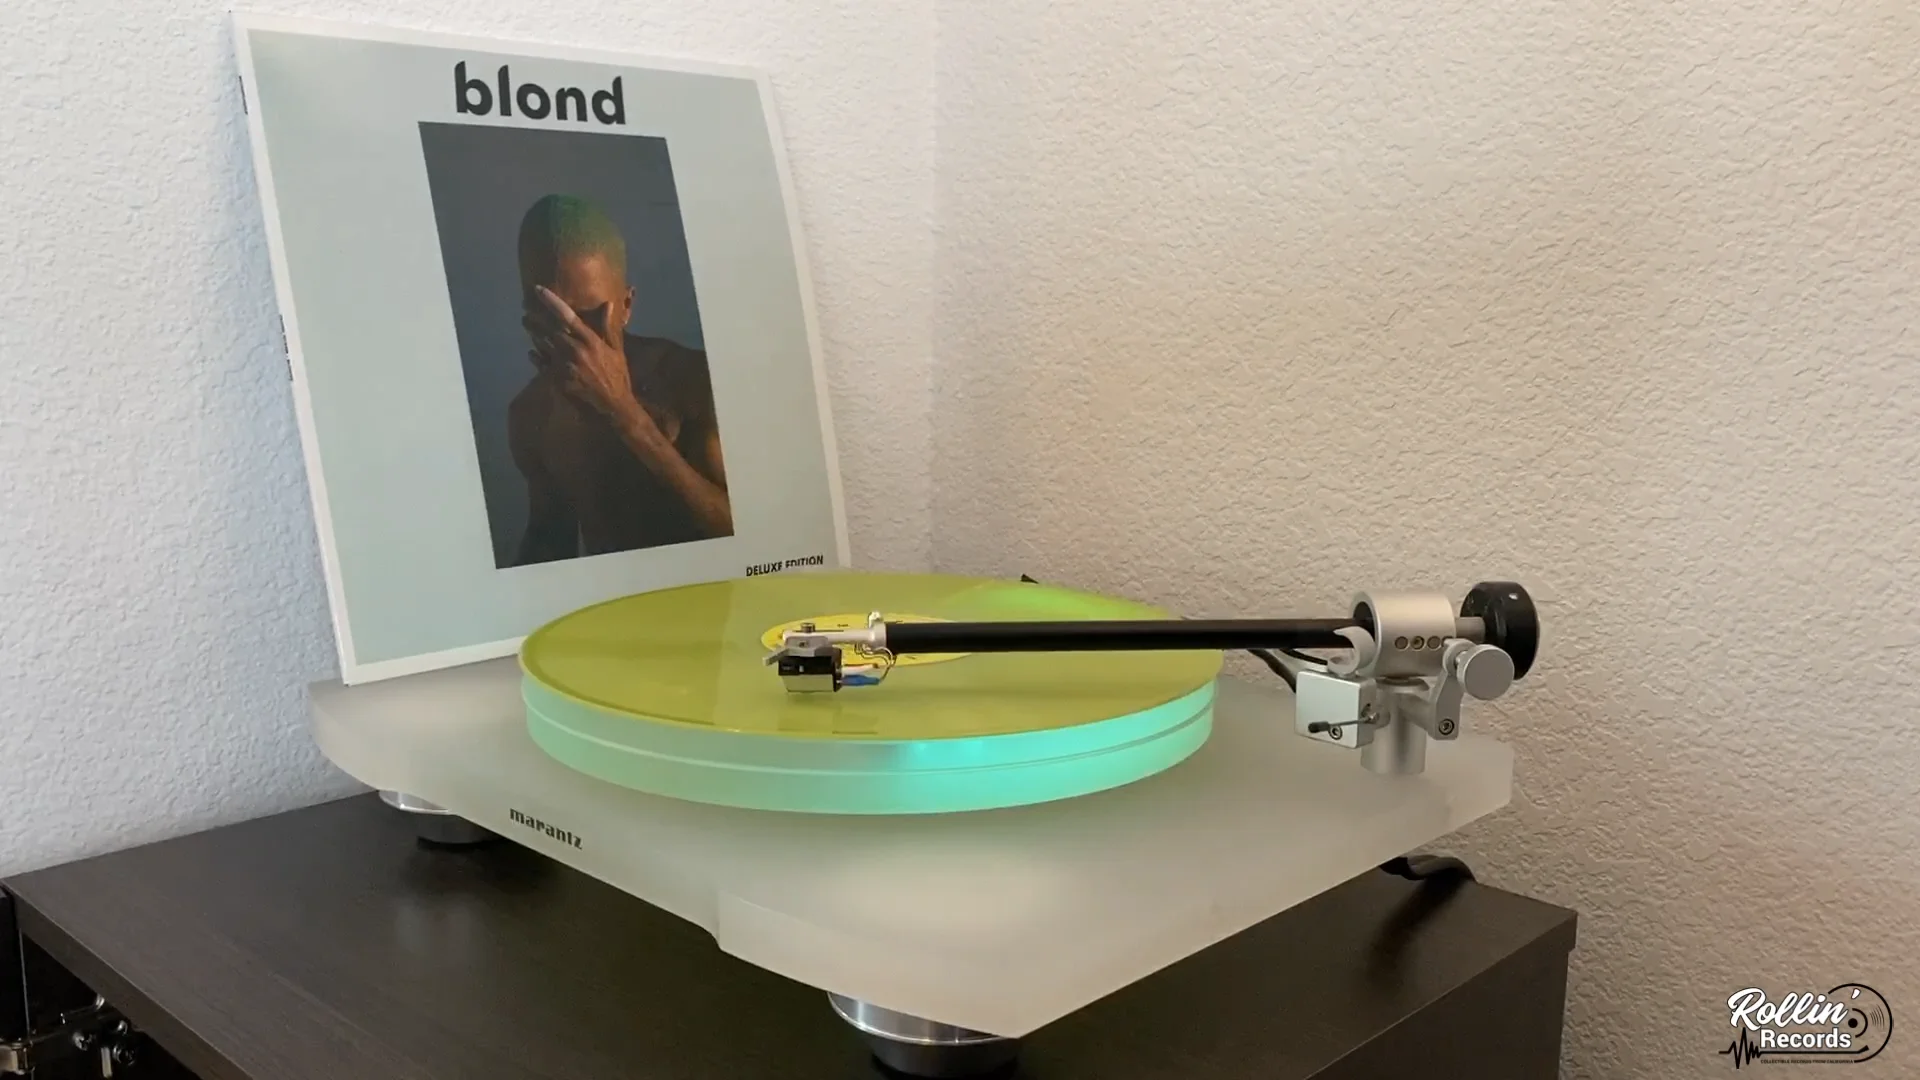 Frank Ocean - Blond Deluxe Edition Vinyl on Vimeo